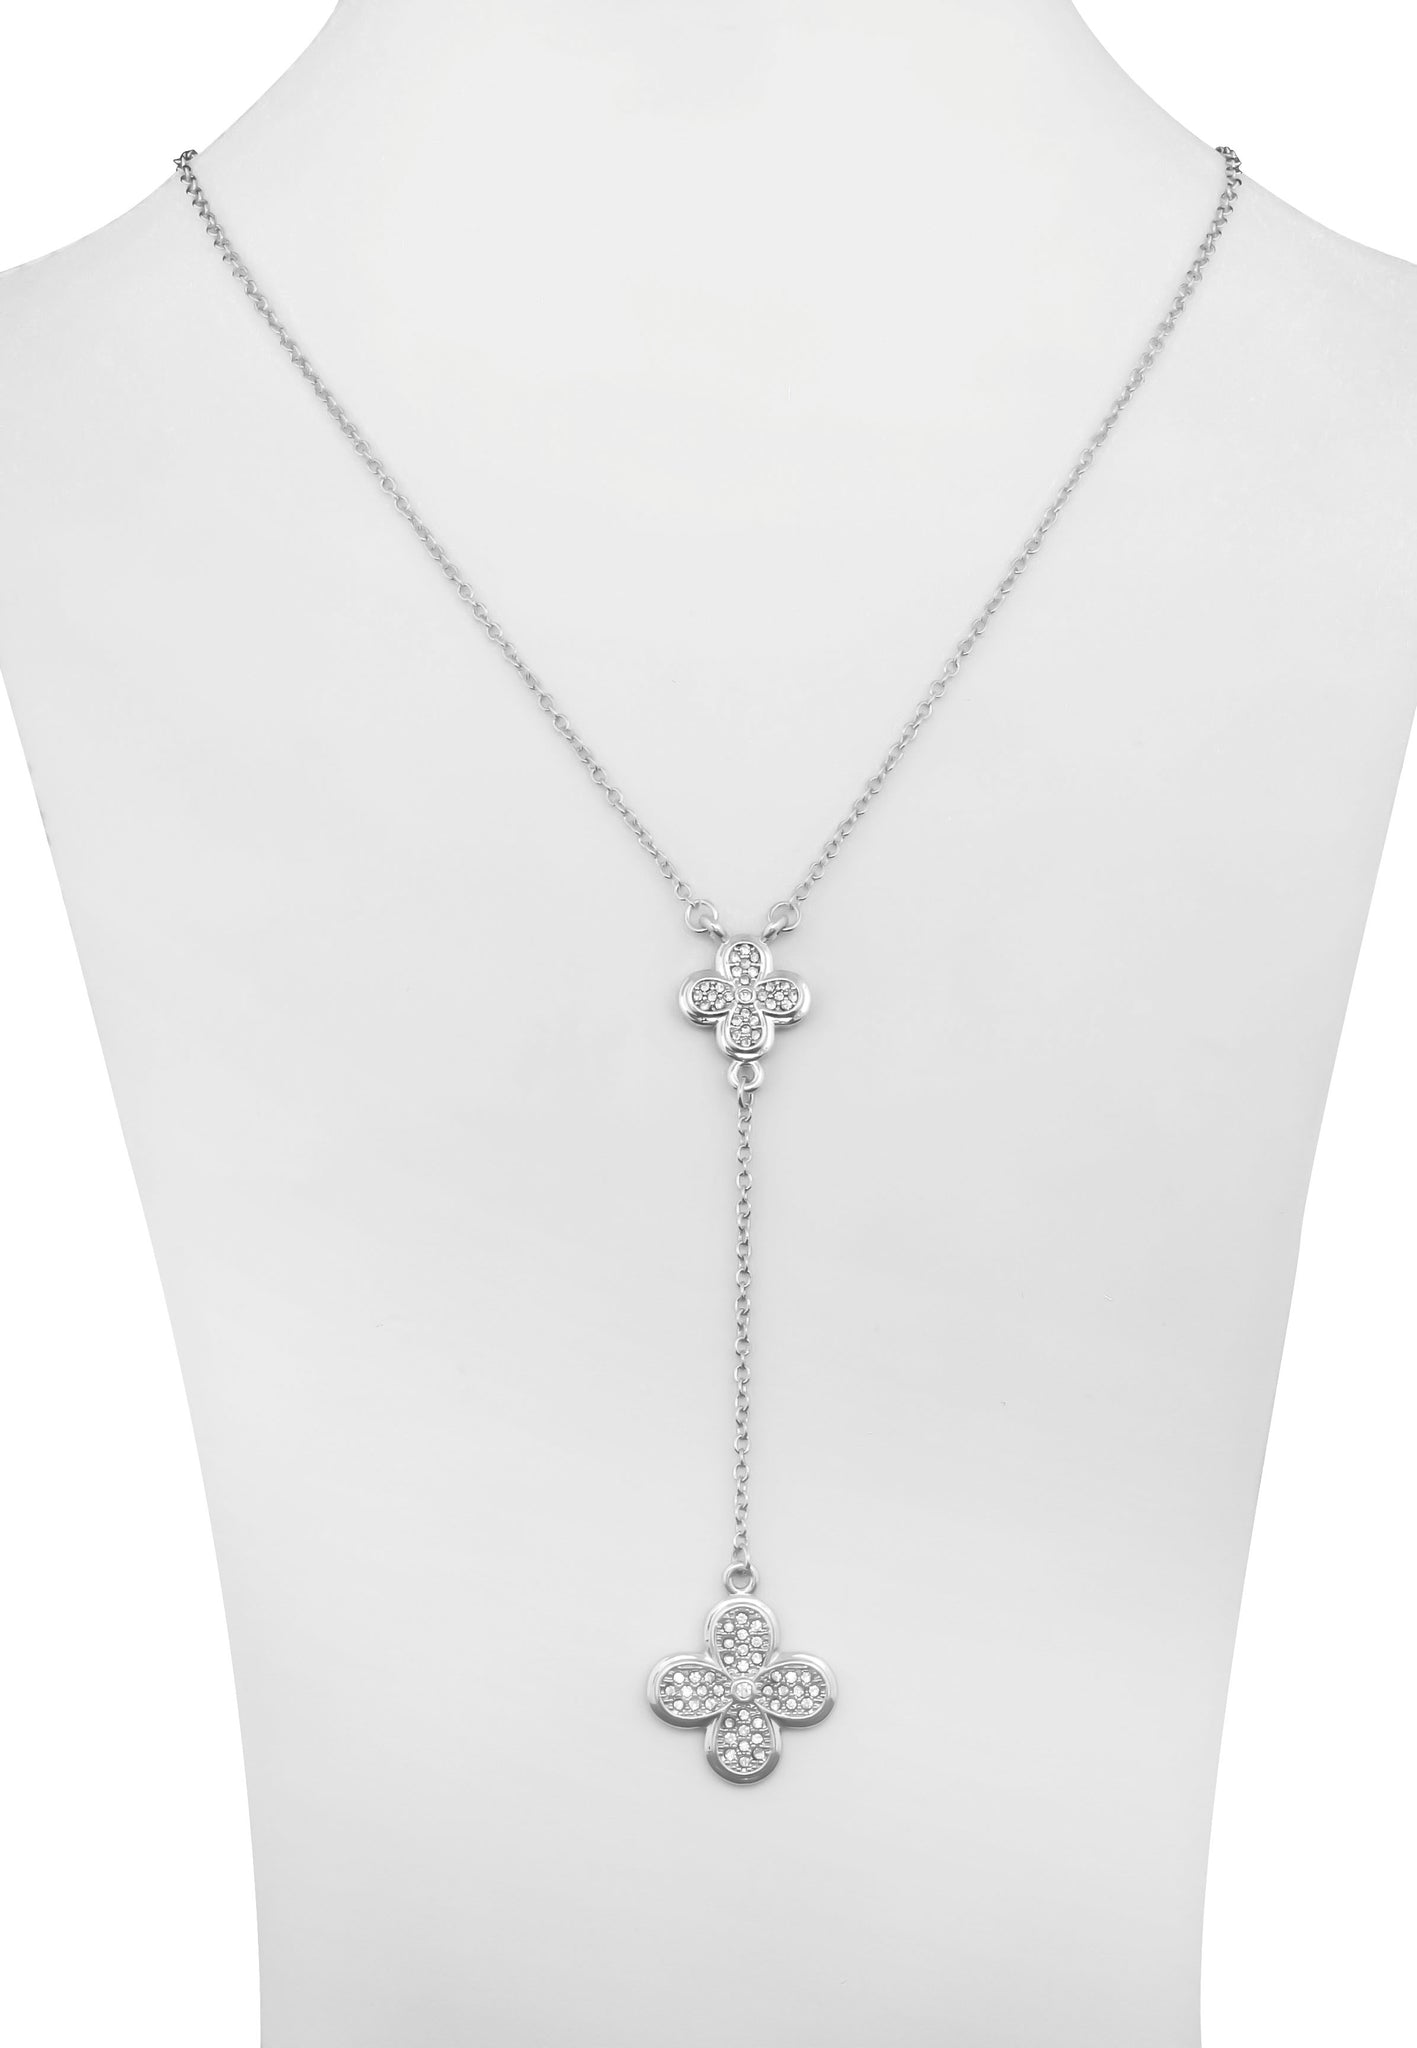 Stunning Alcazar Style Rhodium Swarovski Crystal Station Pendant Necklace.